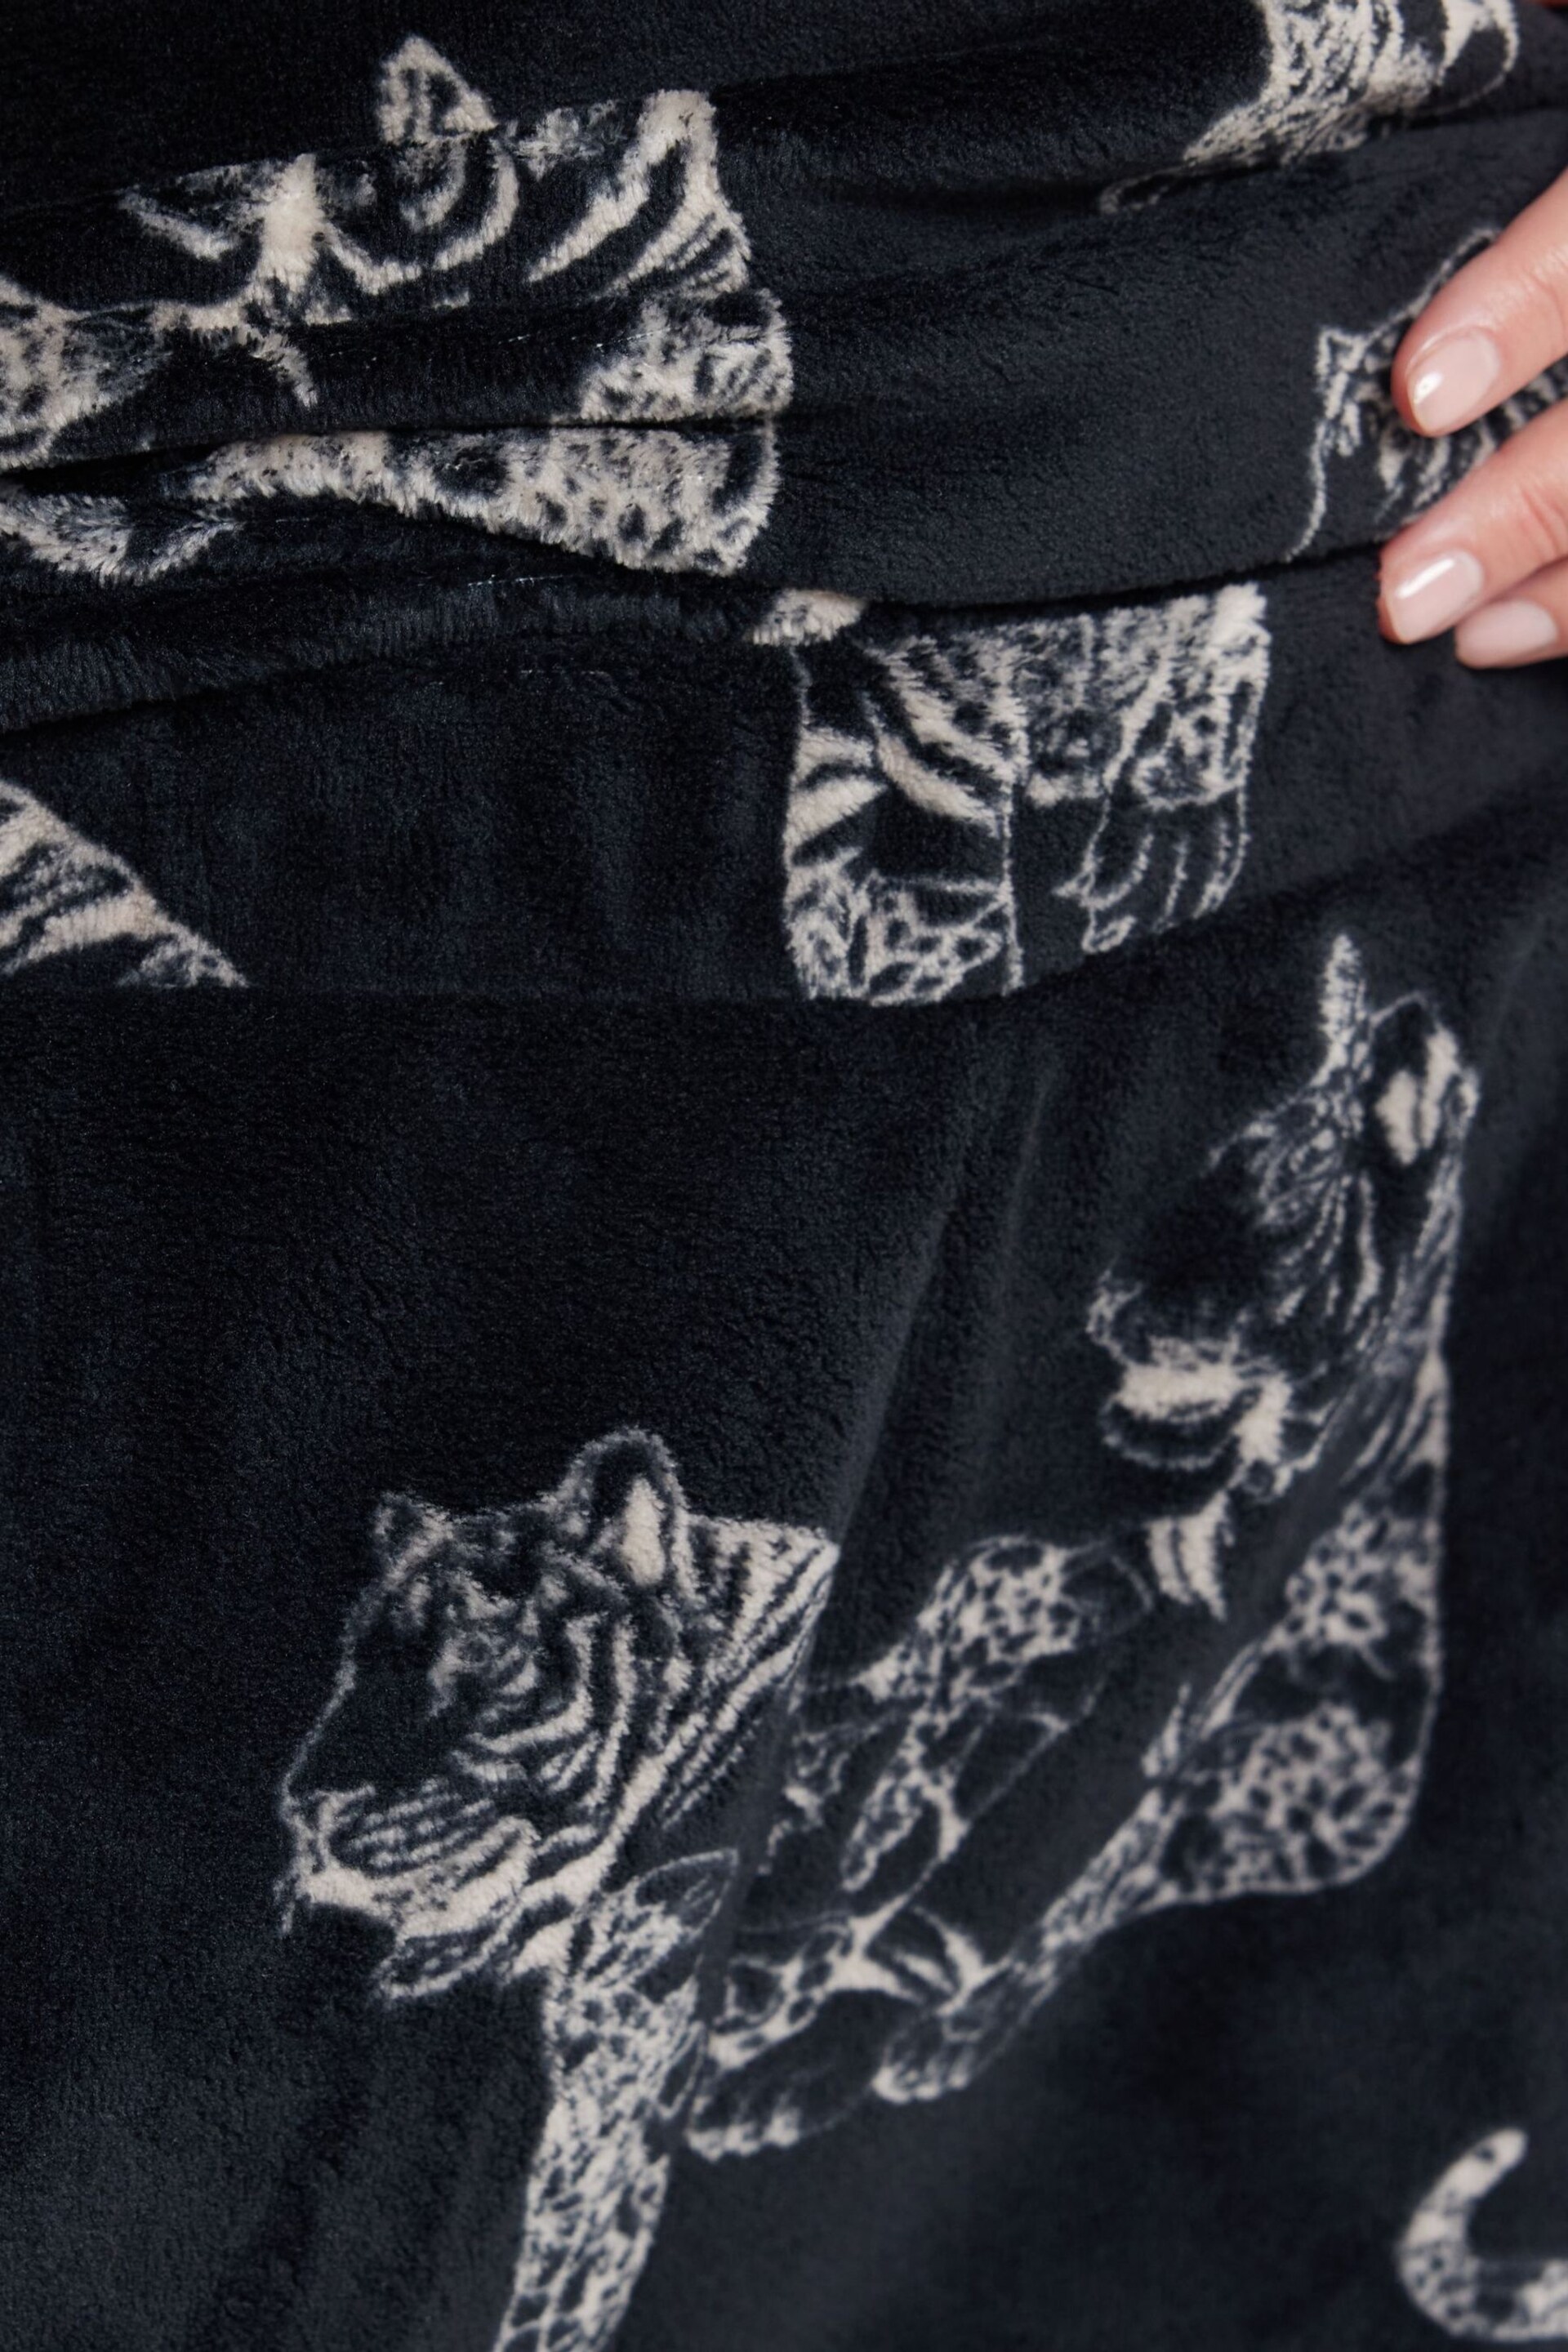 Chelsea Peers Black Curve Fleece Linear Tiger Print Co-ord Set - Image 5 of 5